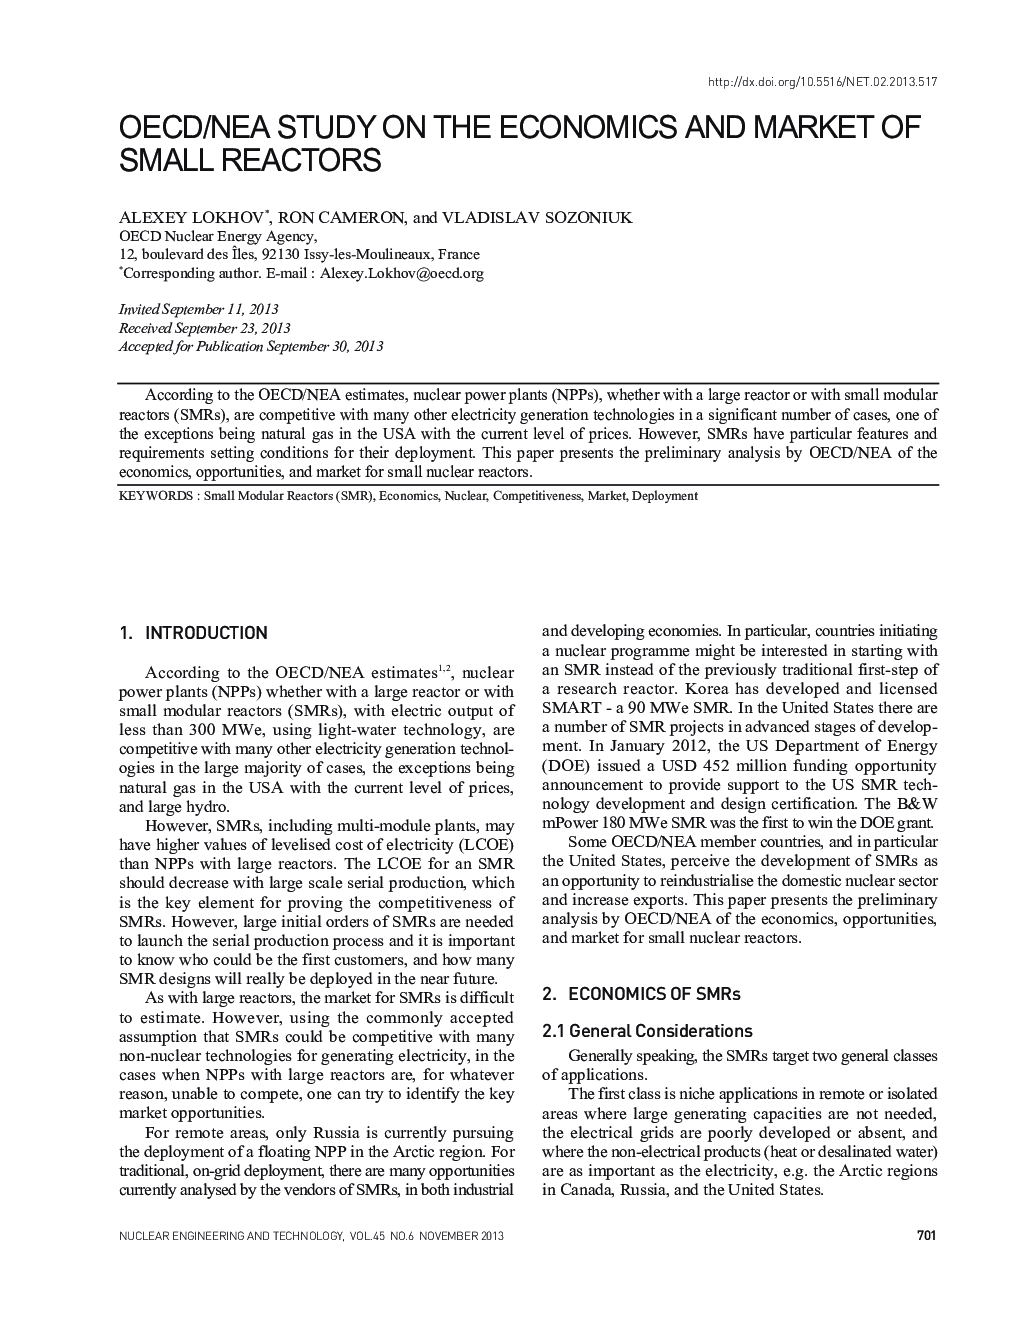 OECD/NEA STUDY ON THE ECONOMICS AND MARKET OF SMALL REACTORS